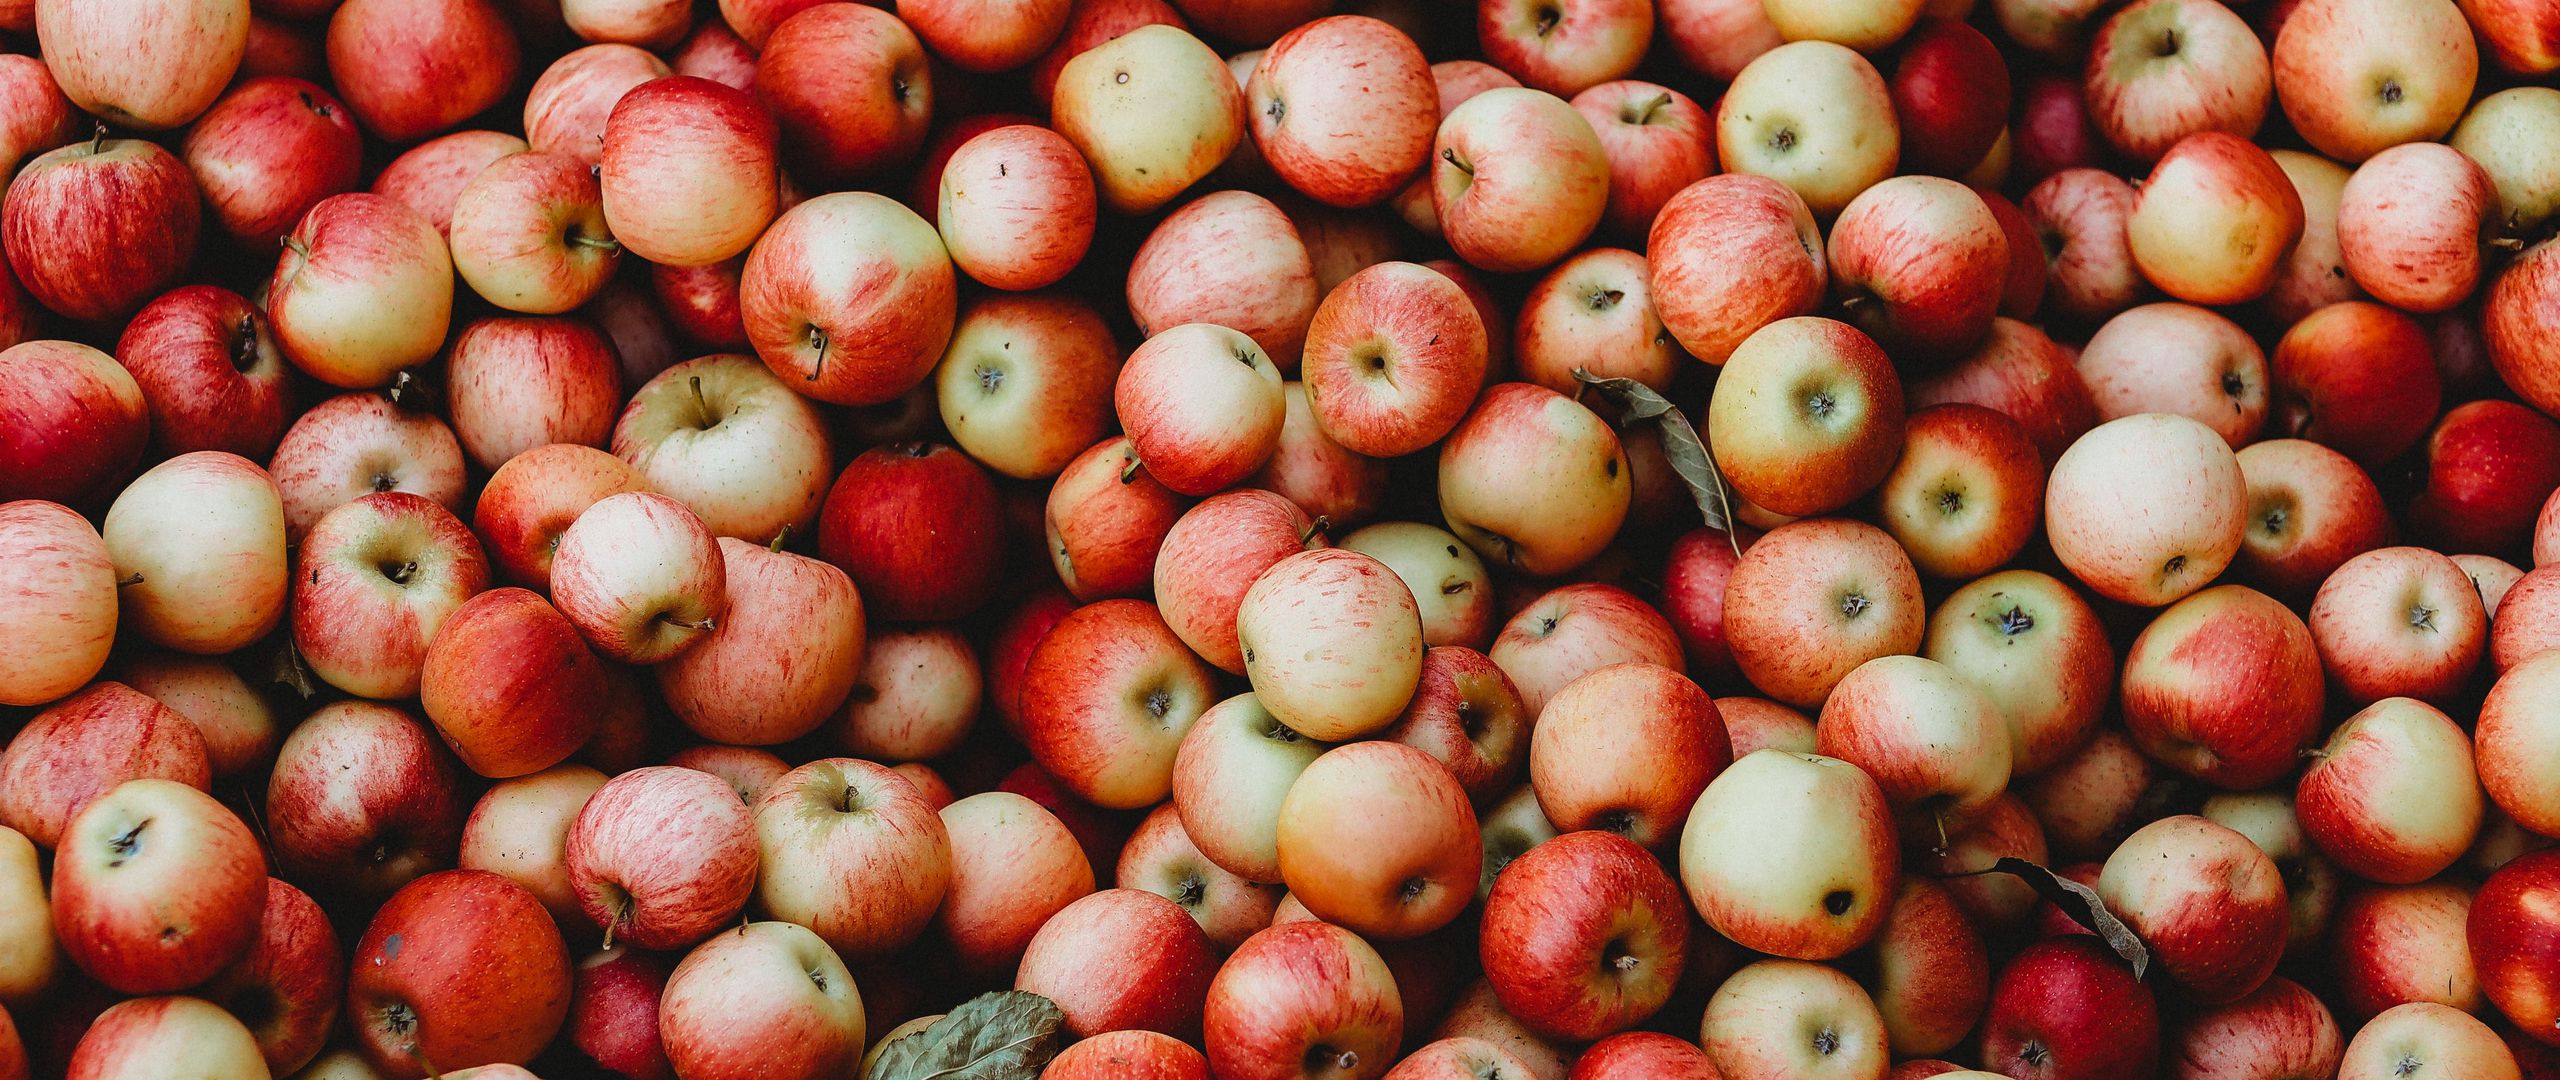 Download wallpaper 2560x1080 apples, fruit, garden, harvest dual wide 1080p HD background